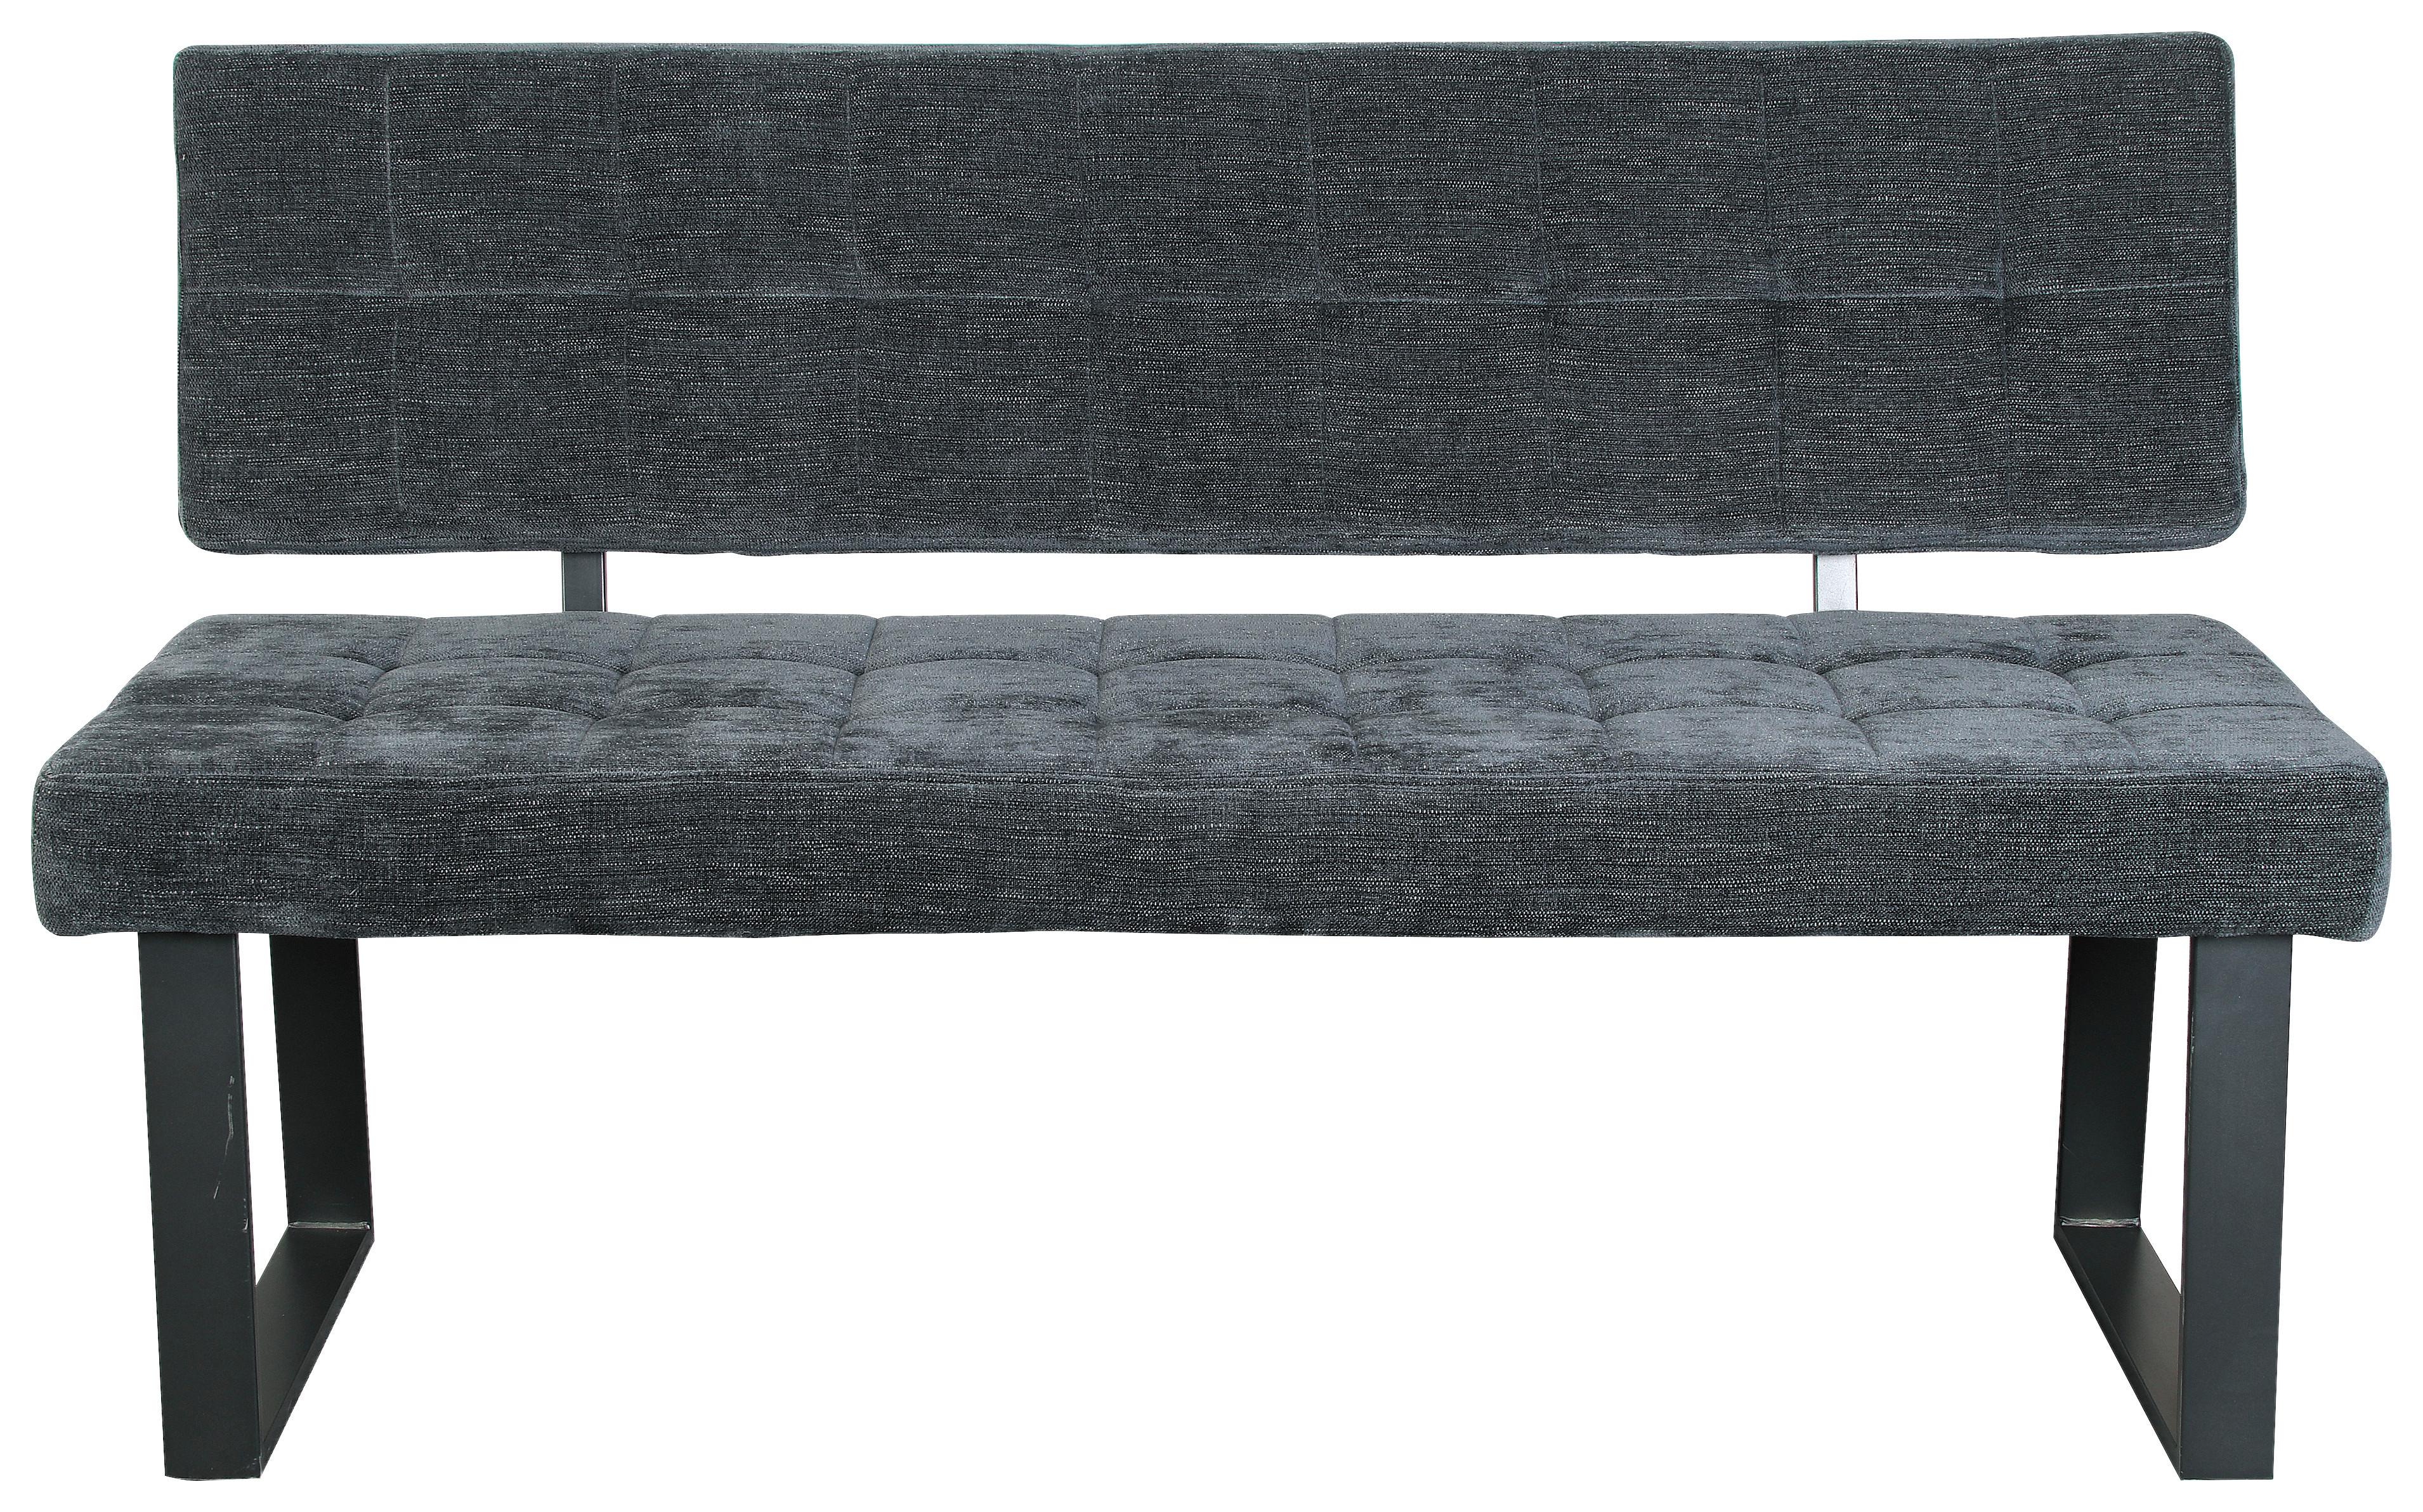 Sitzbank mit Lehne Dunkelgrau Volda 140x85 cm - Dunkelgrau/Schwarz, MODERN, Textil/Metall (140/85/56cm) - MID.YOU